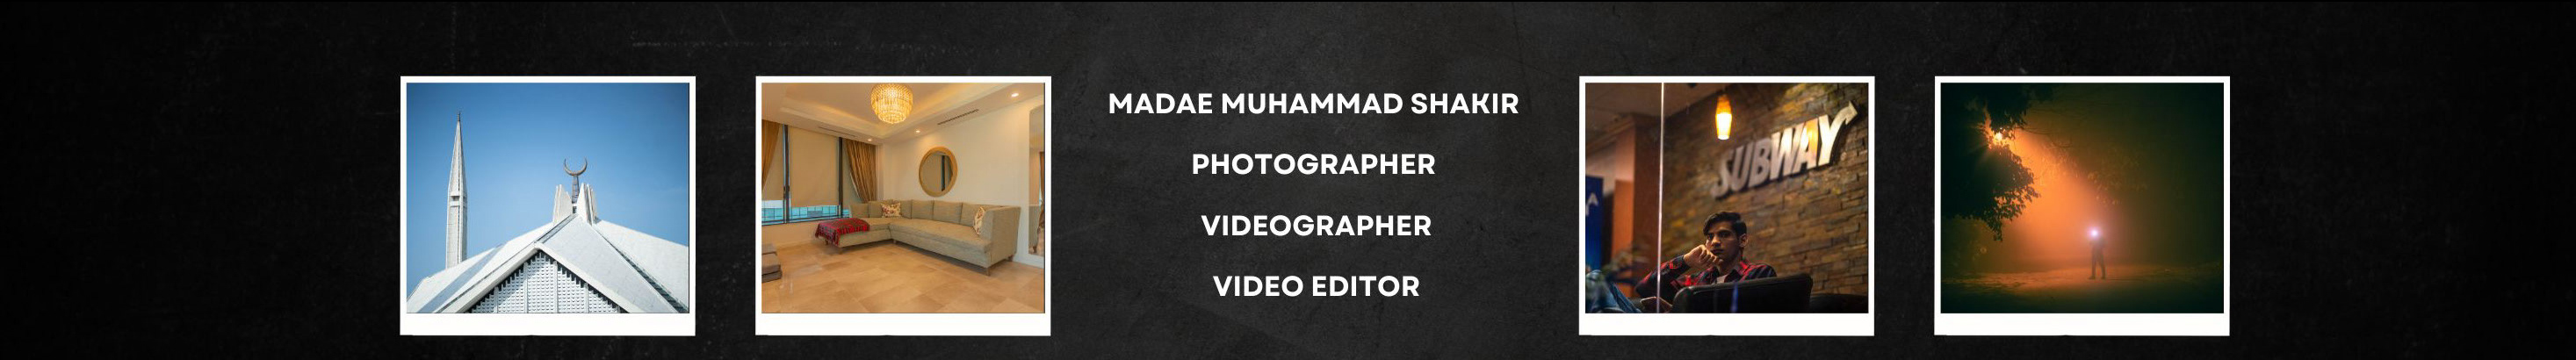 Madae Muhammad Shakir's profile banner